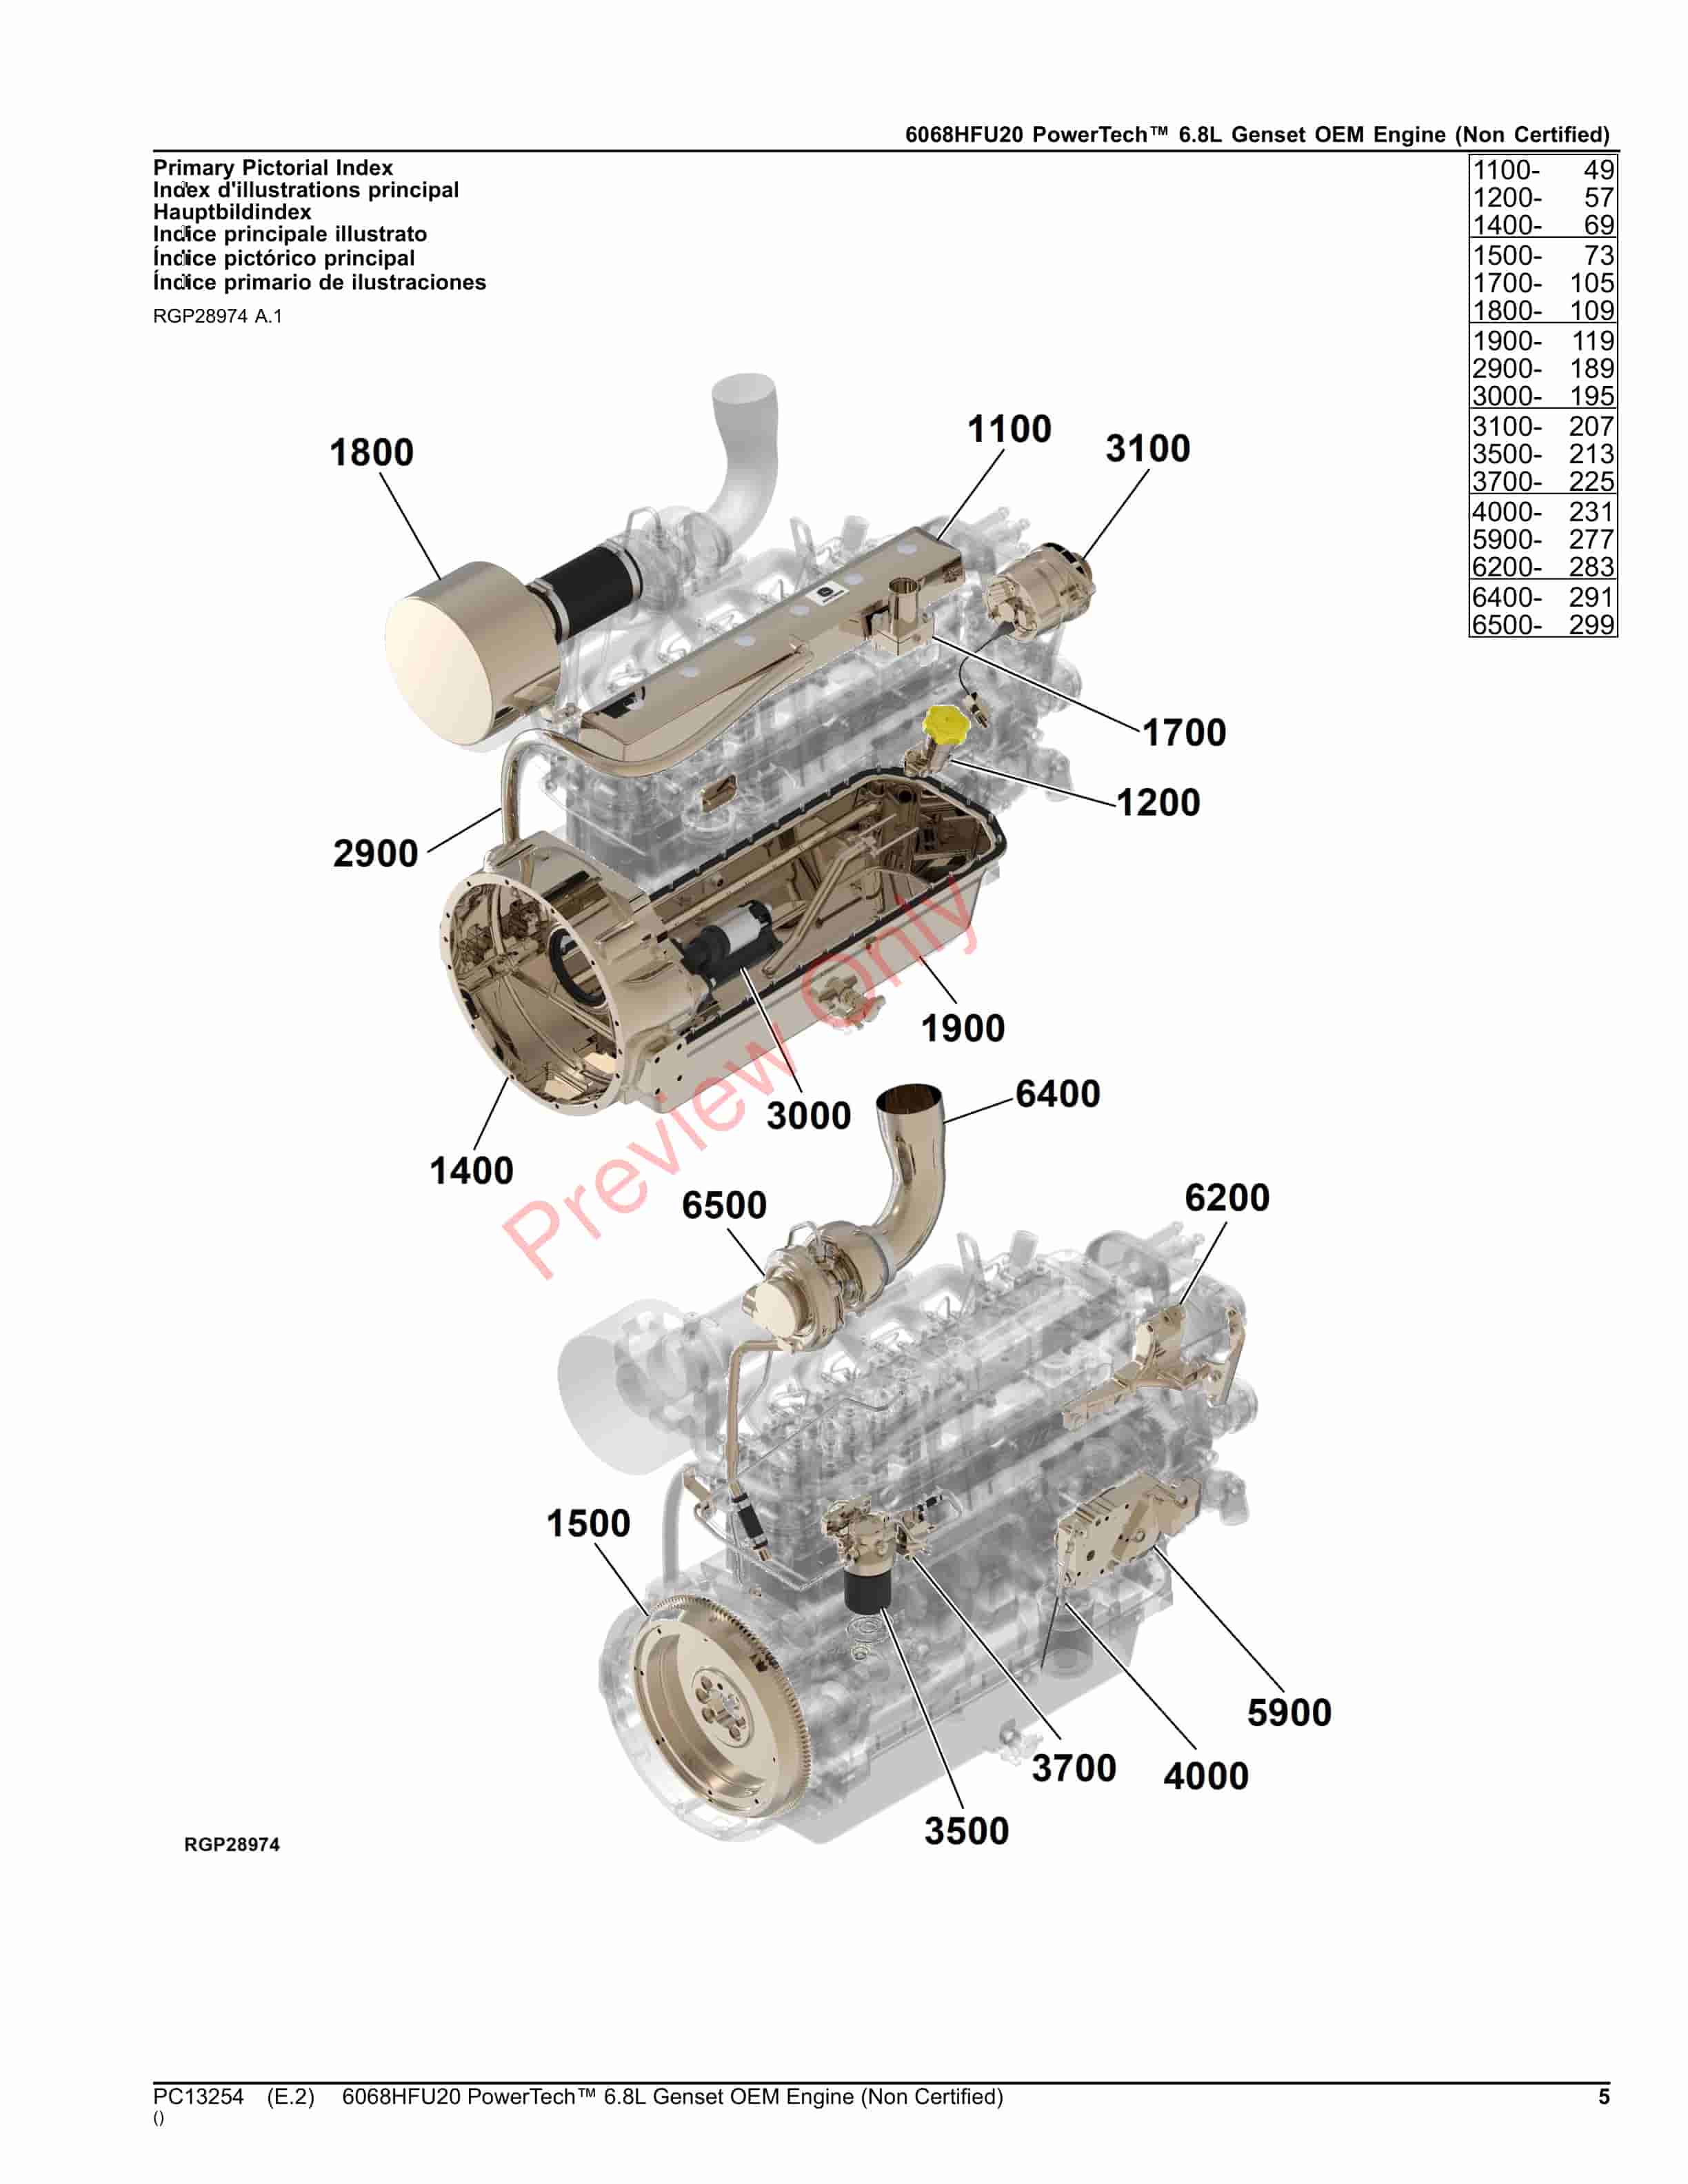 John Deere 6068HFU20 PowerTech 6.8L Genset OEM Engine (Non Certified) Parts Catalog PC13254 17SEP23-5